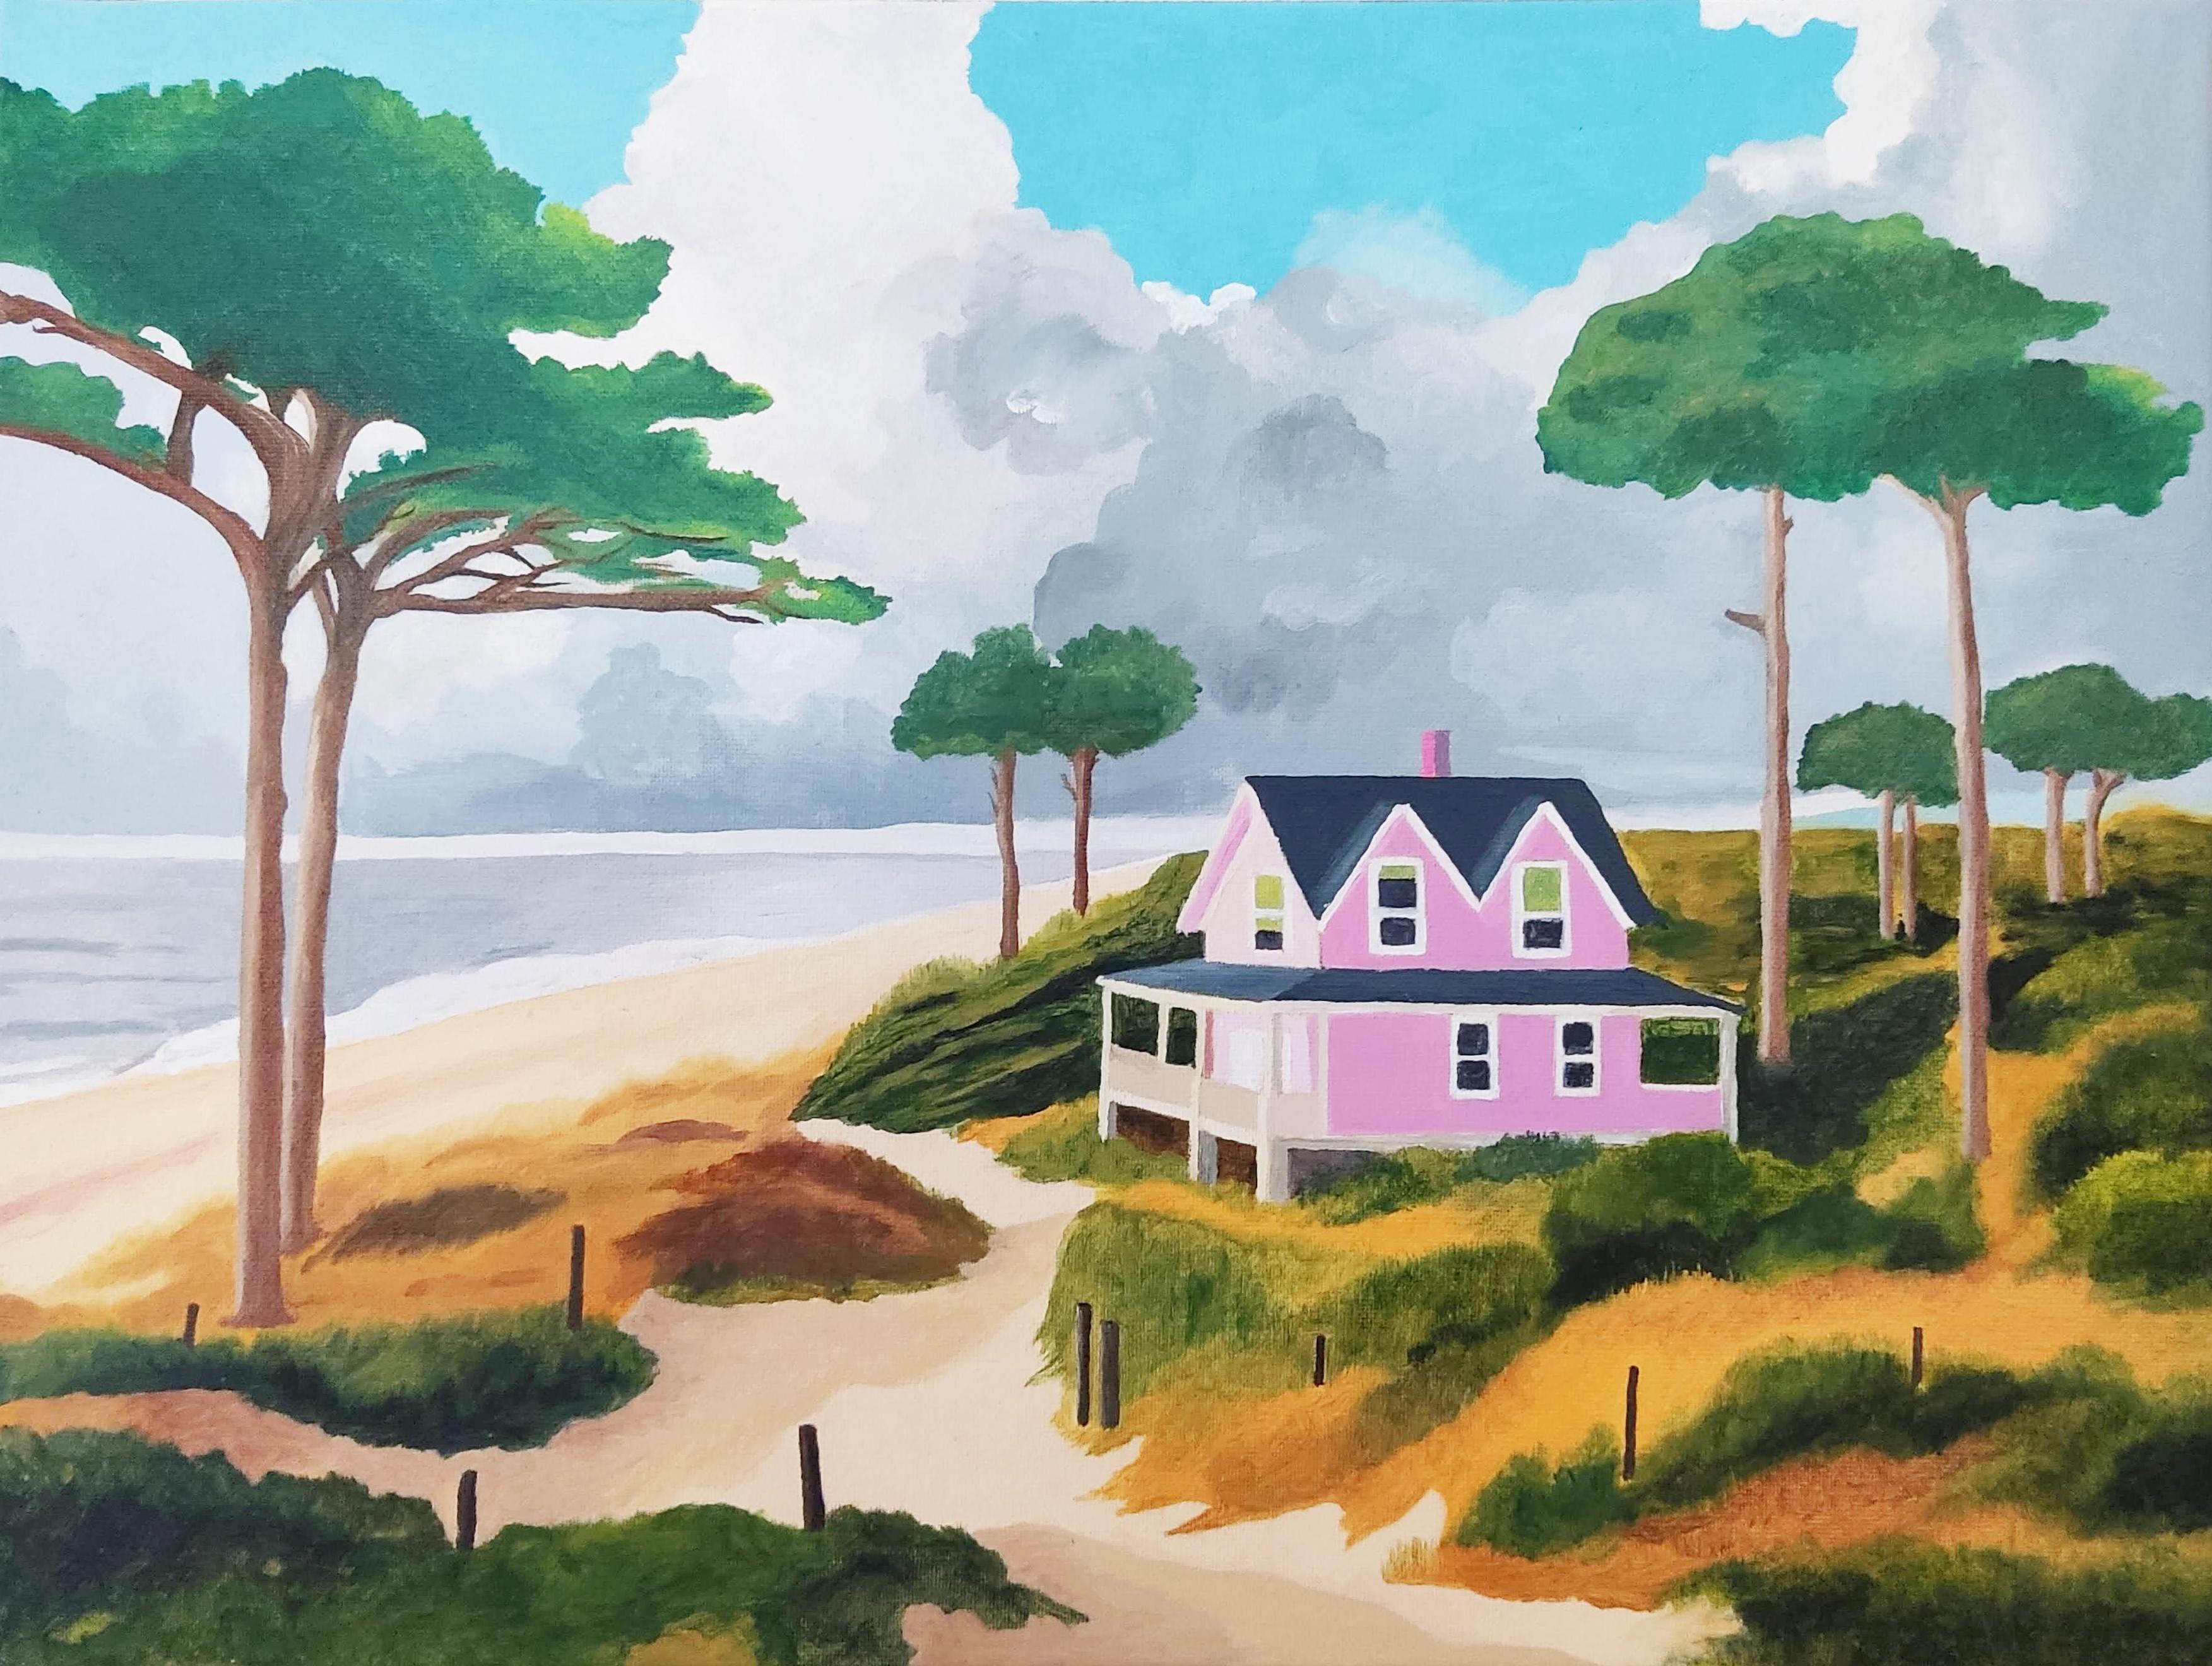 En allant au bord de la mer, Original Oil Painting, Seaside, Trees, House